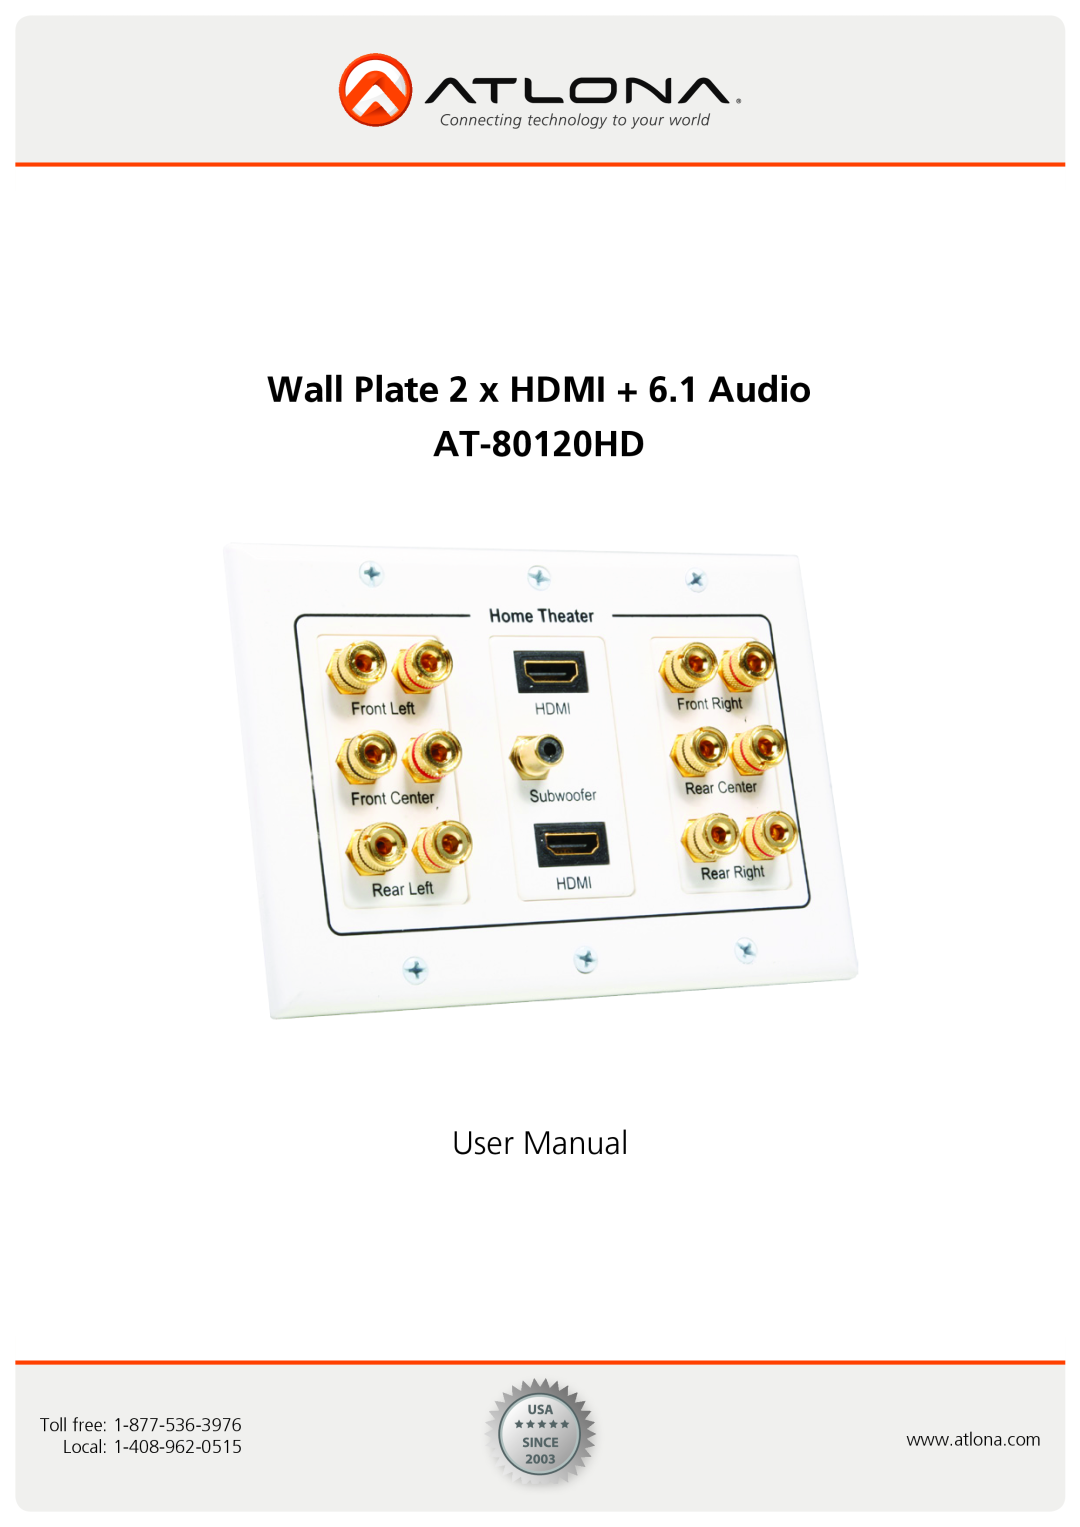 Atlona user manual Wall Plate 2 x HDMI + 6.1 Audio AT-80120HD, User Manual, Toll free, Local 